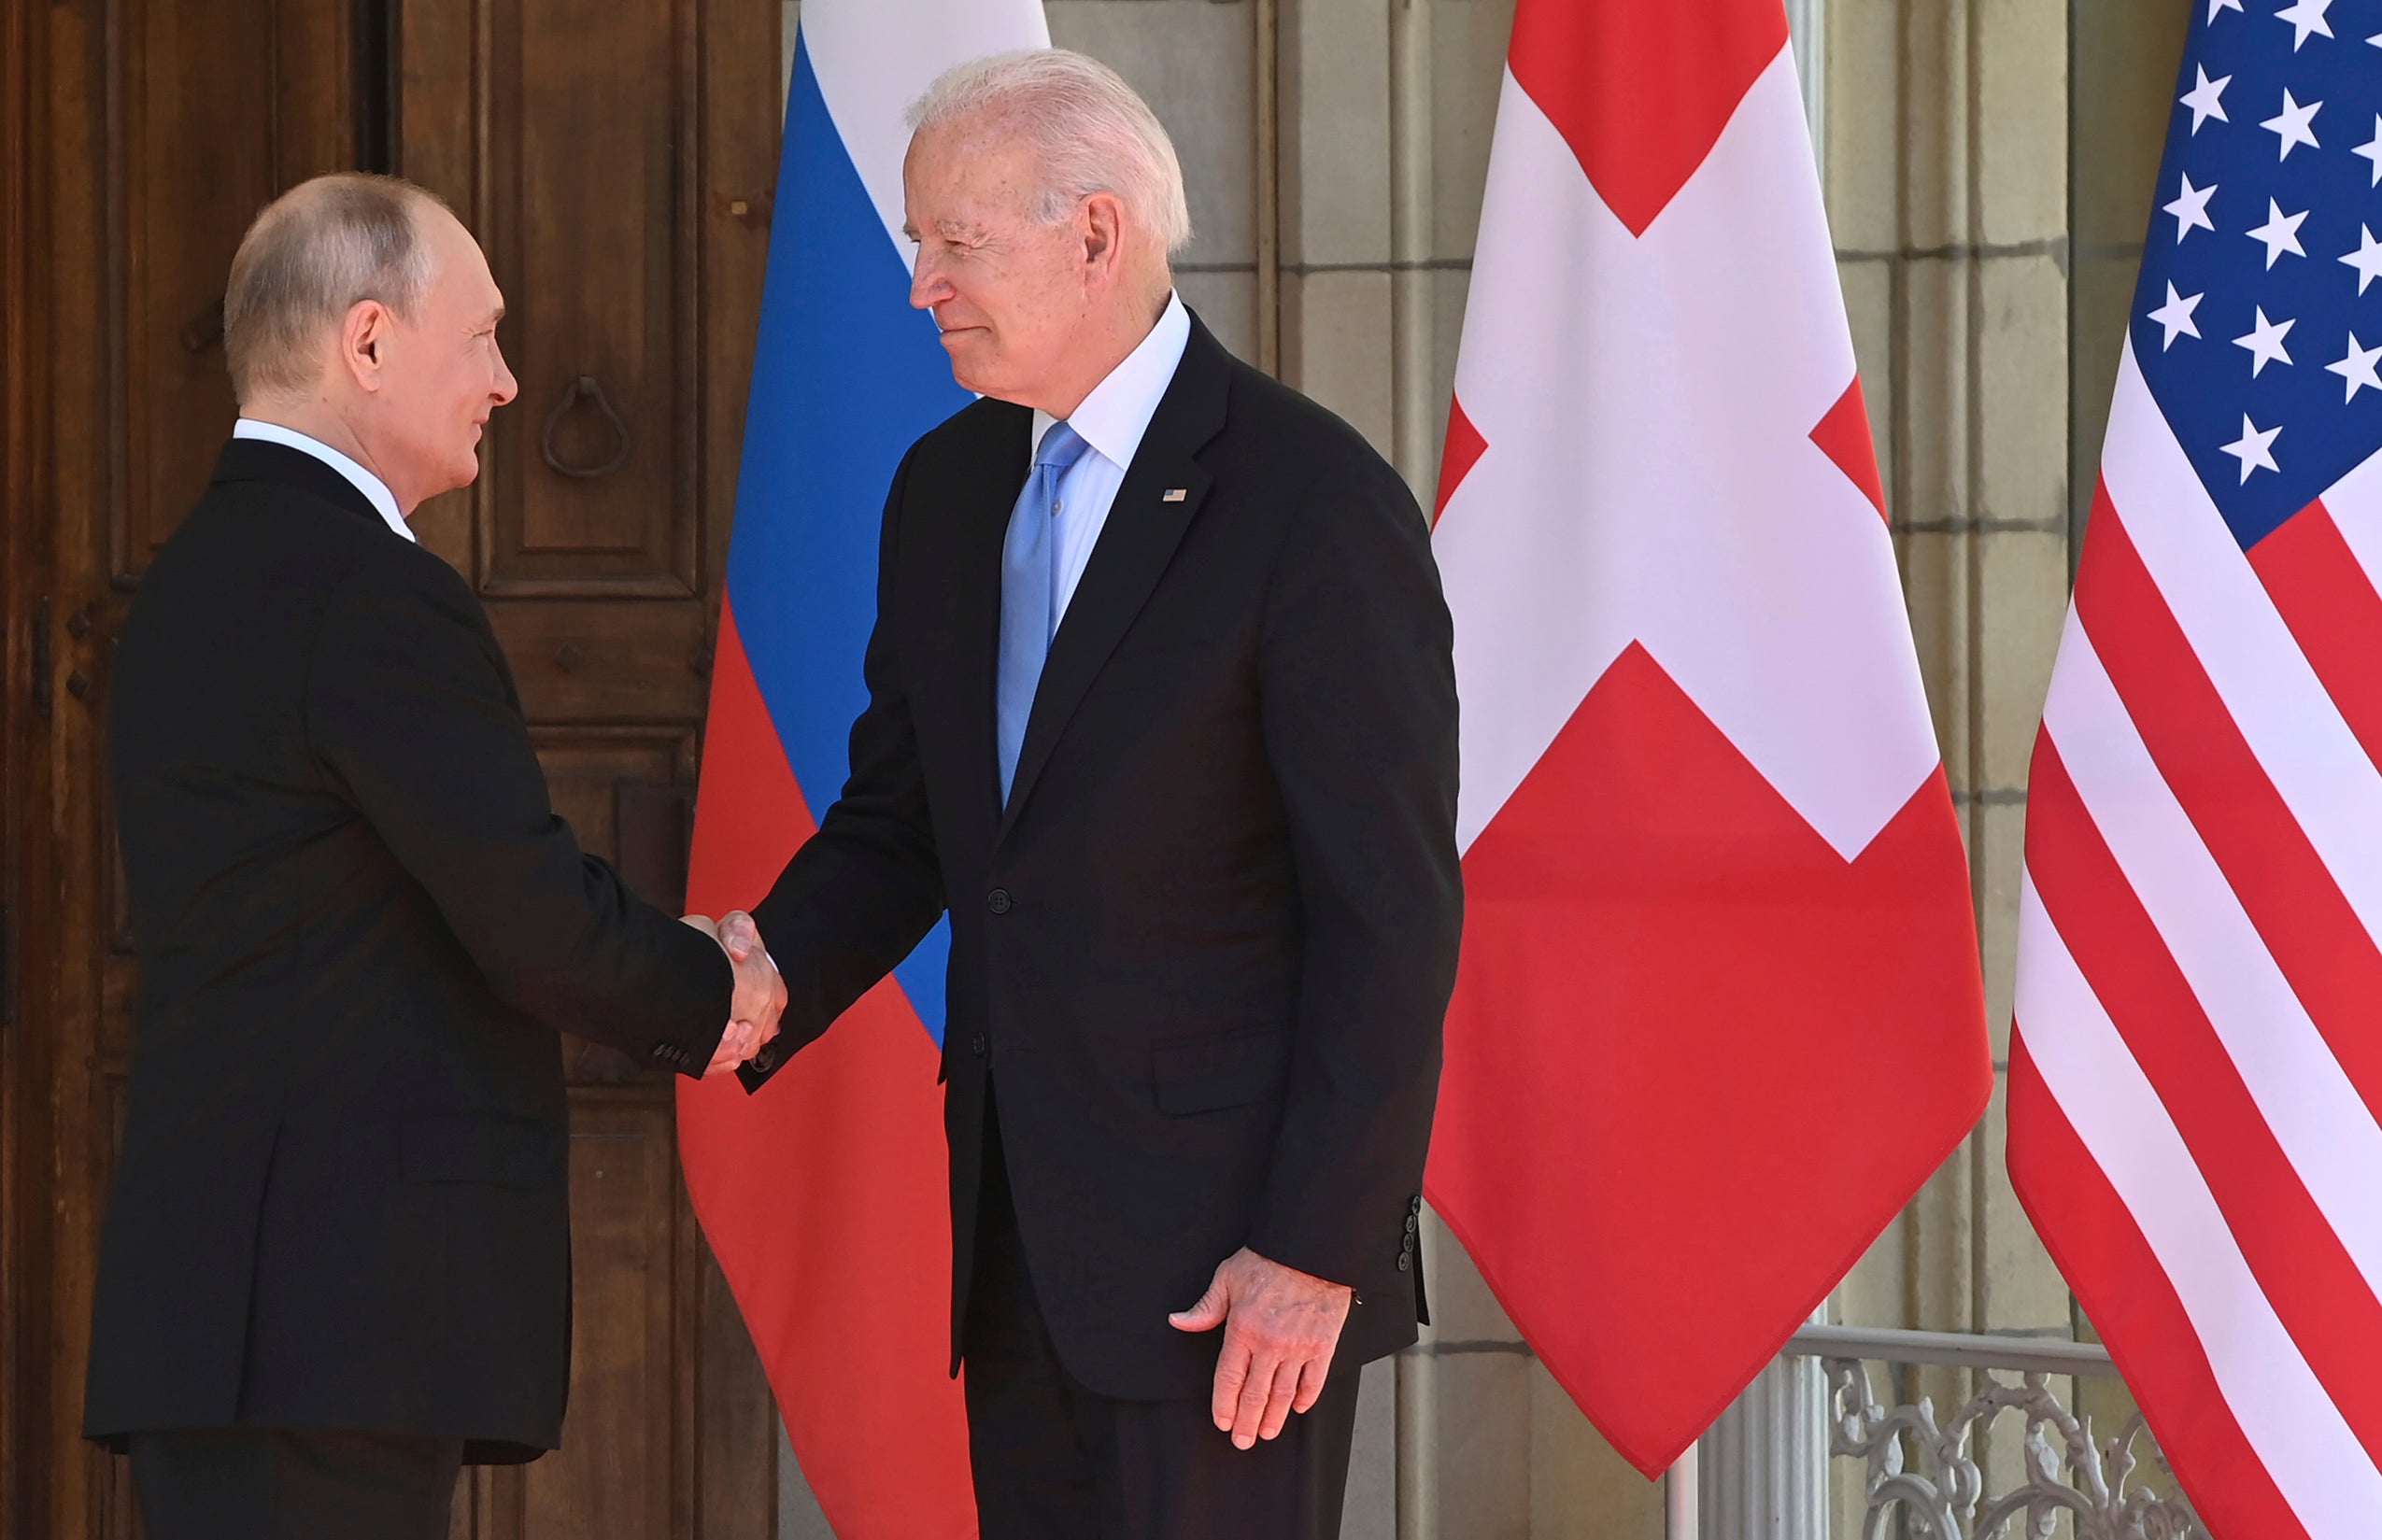 President Joe Biden and Russian President Vladimir Putin shaking hands